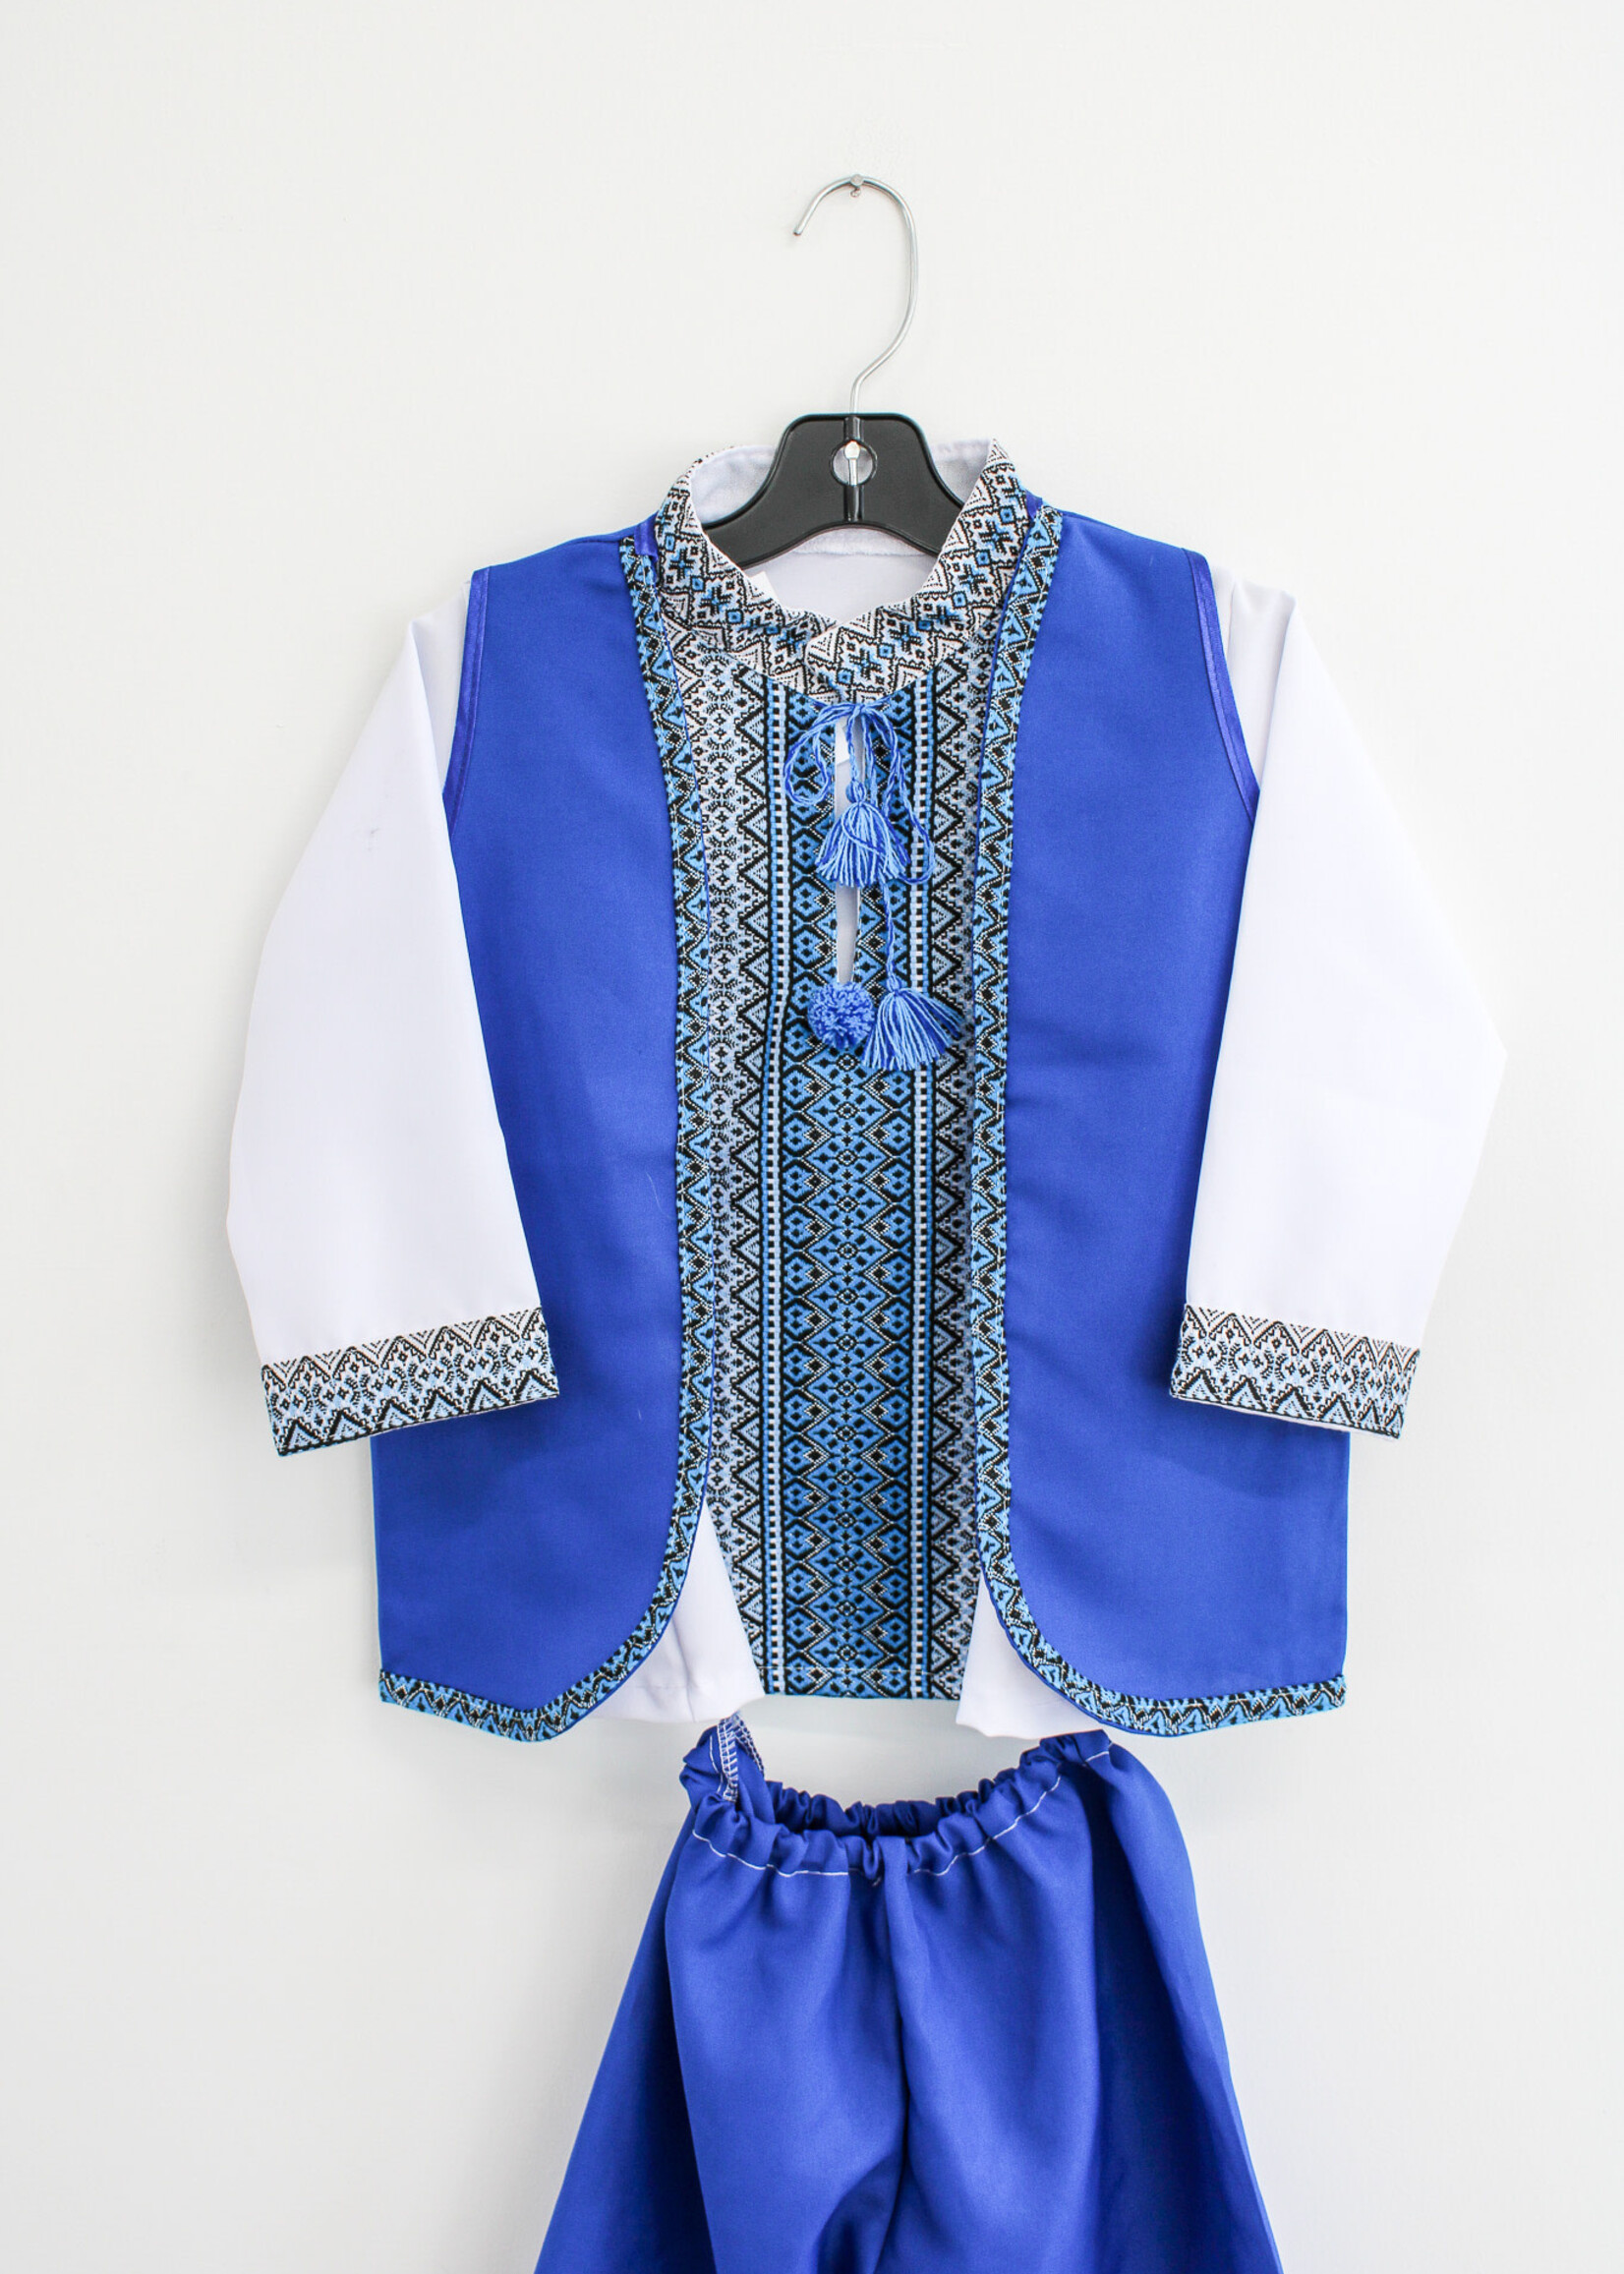 KIDs SET Boys - White , Blue embroidered  vyshyvanka, blue  vest and pants